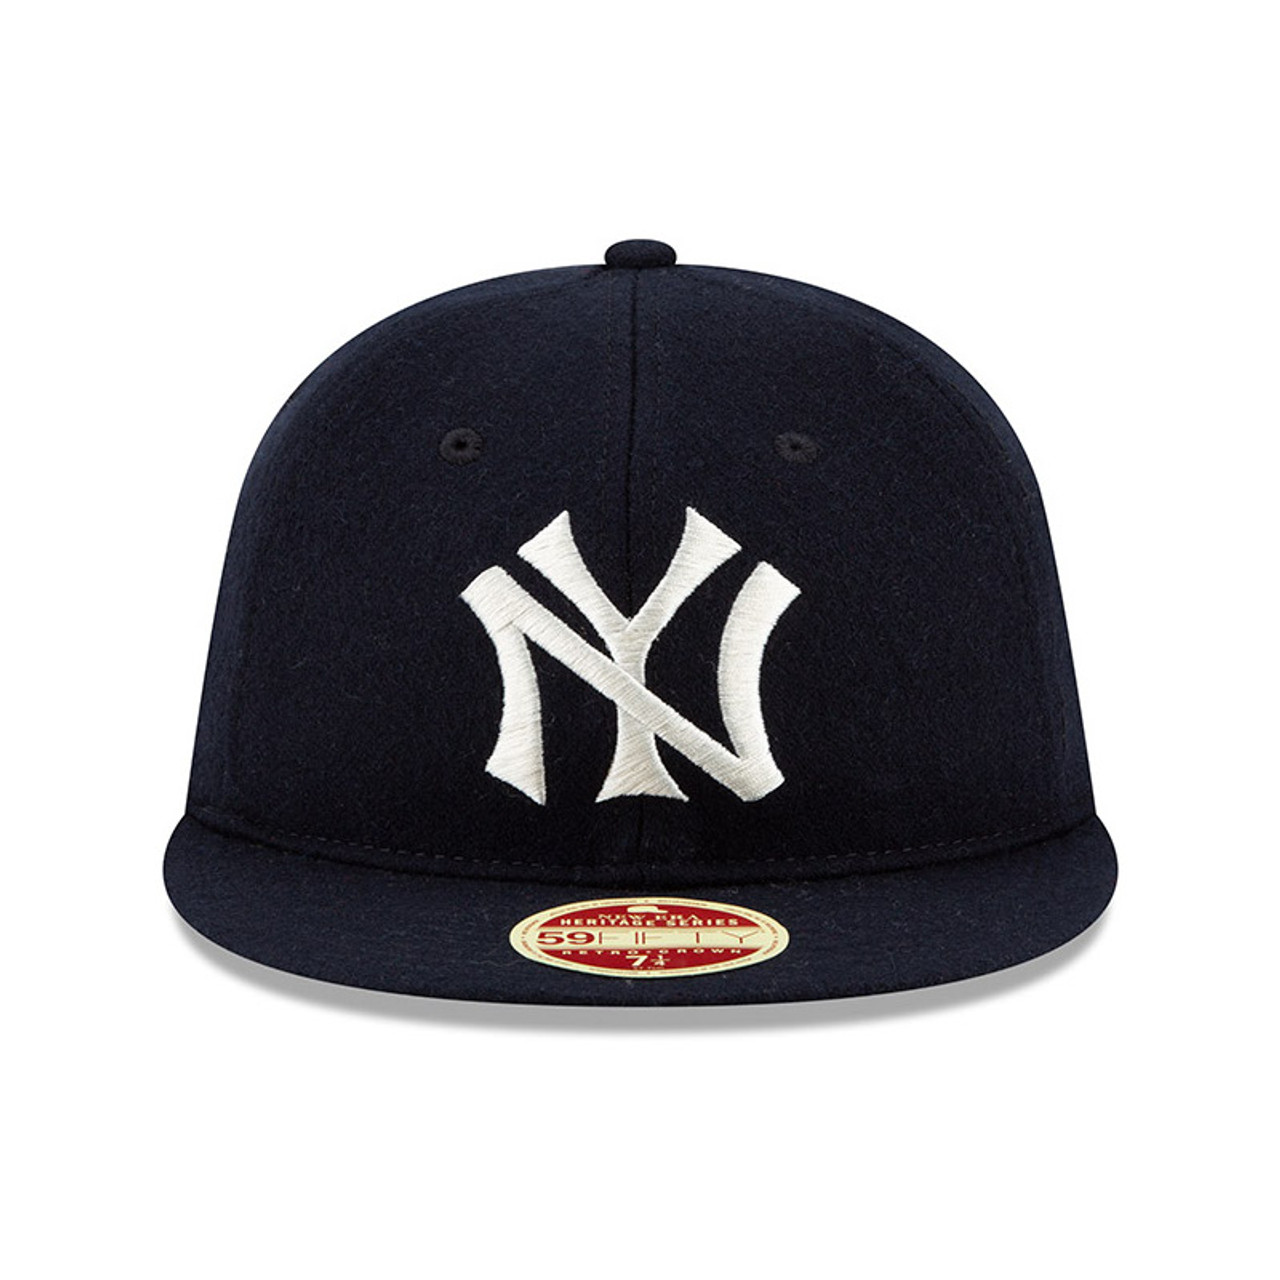 Men’s New Era Heritage Series Authentic 1931 New York Yankees Retro-Crown  59FIFTY Cap